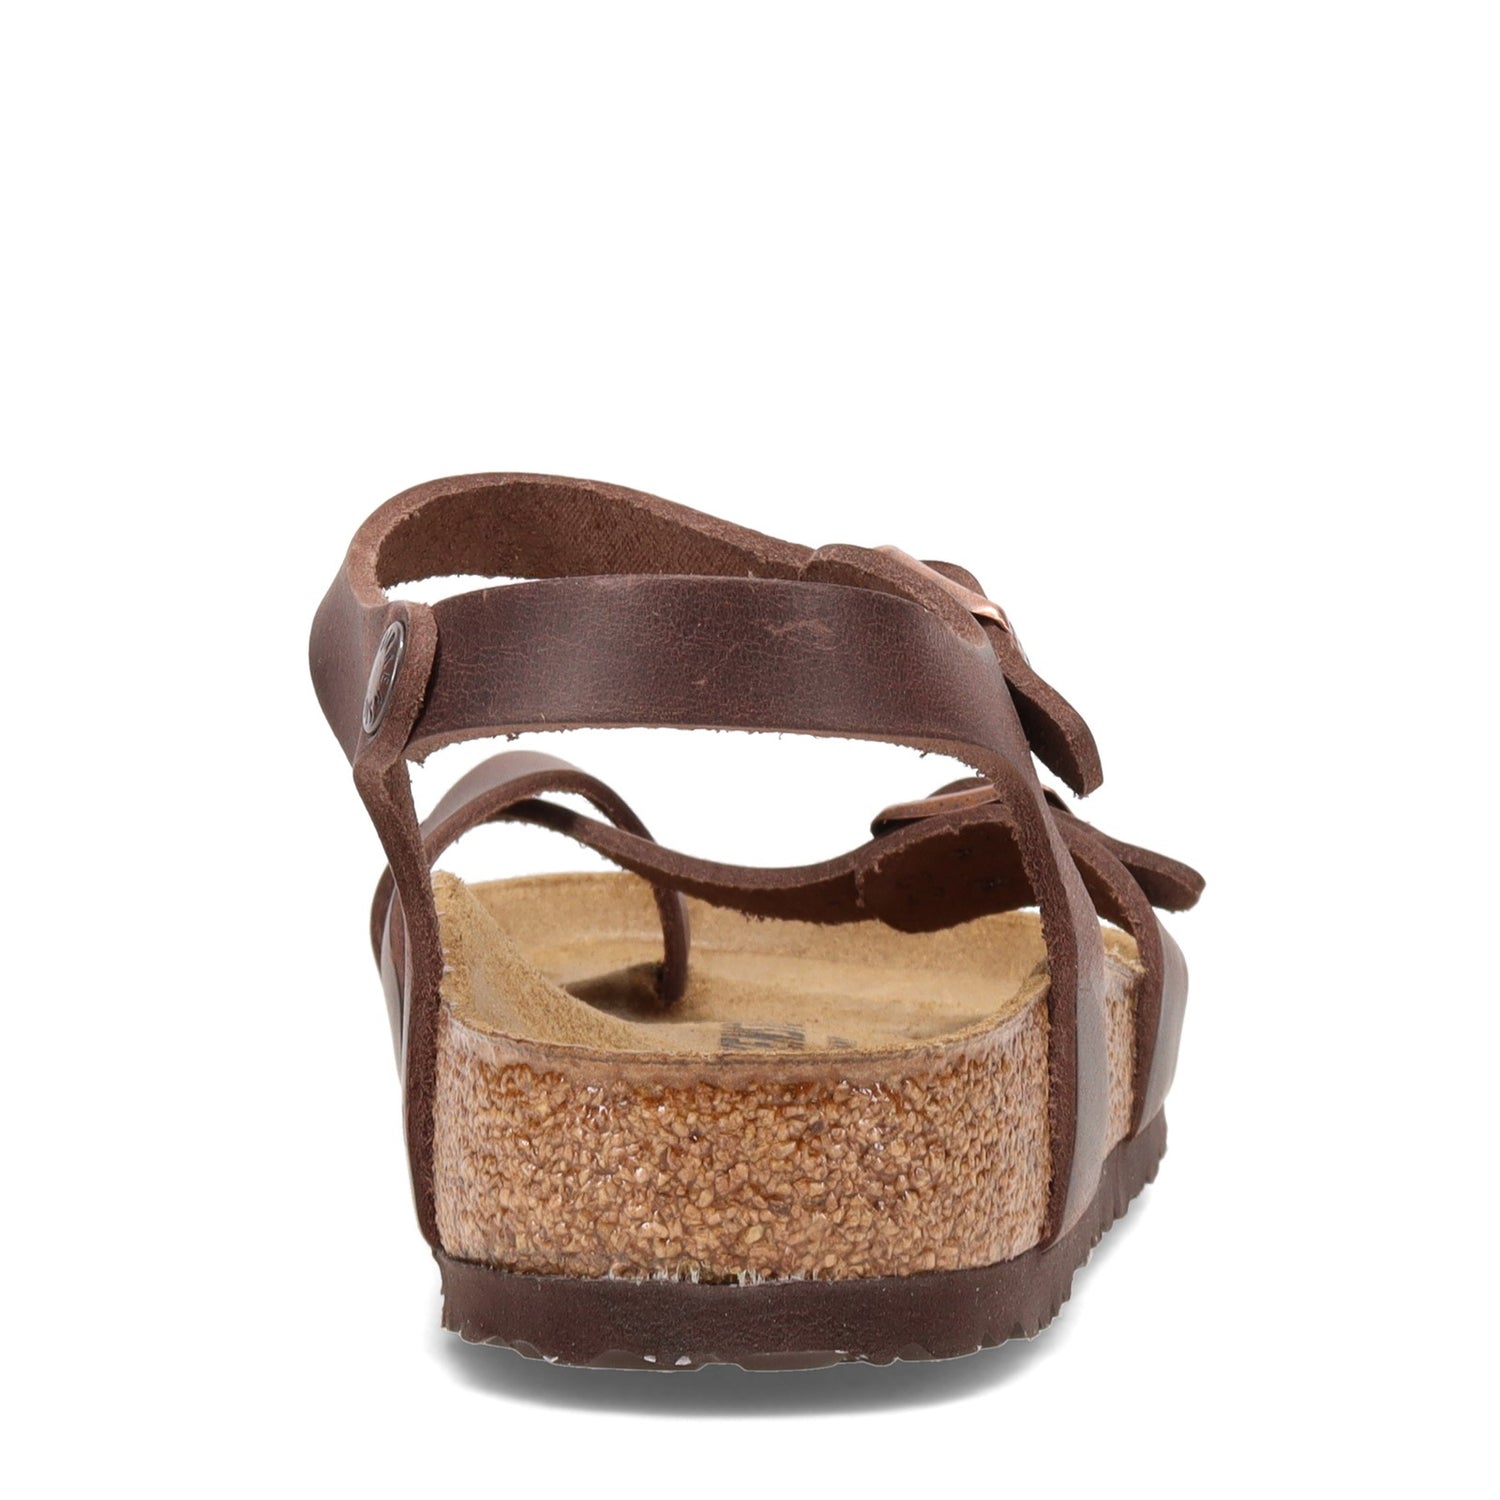 Peltz Shoes  Women's Birkenstock Taormina Sandal - Regular Width HABANA BROWN 1020 010 R